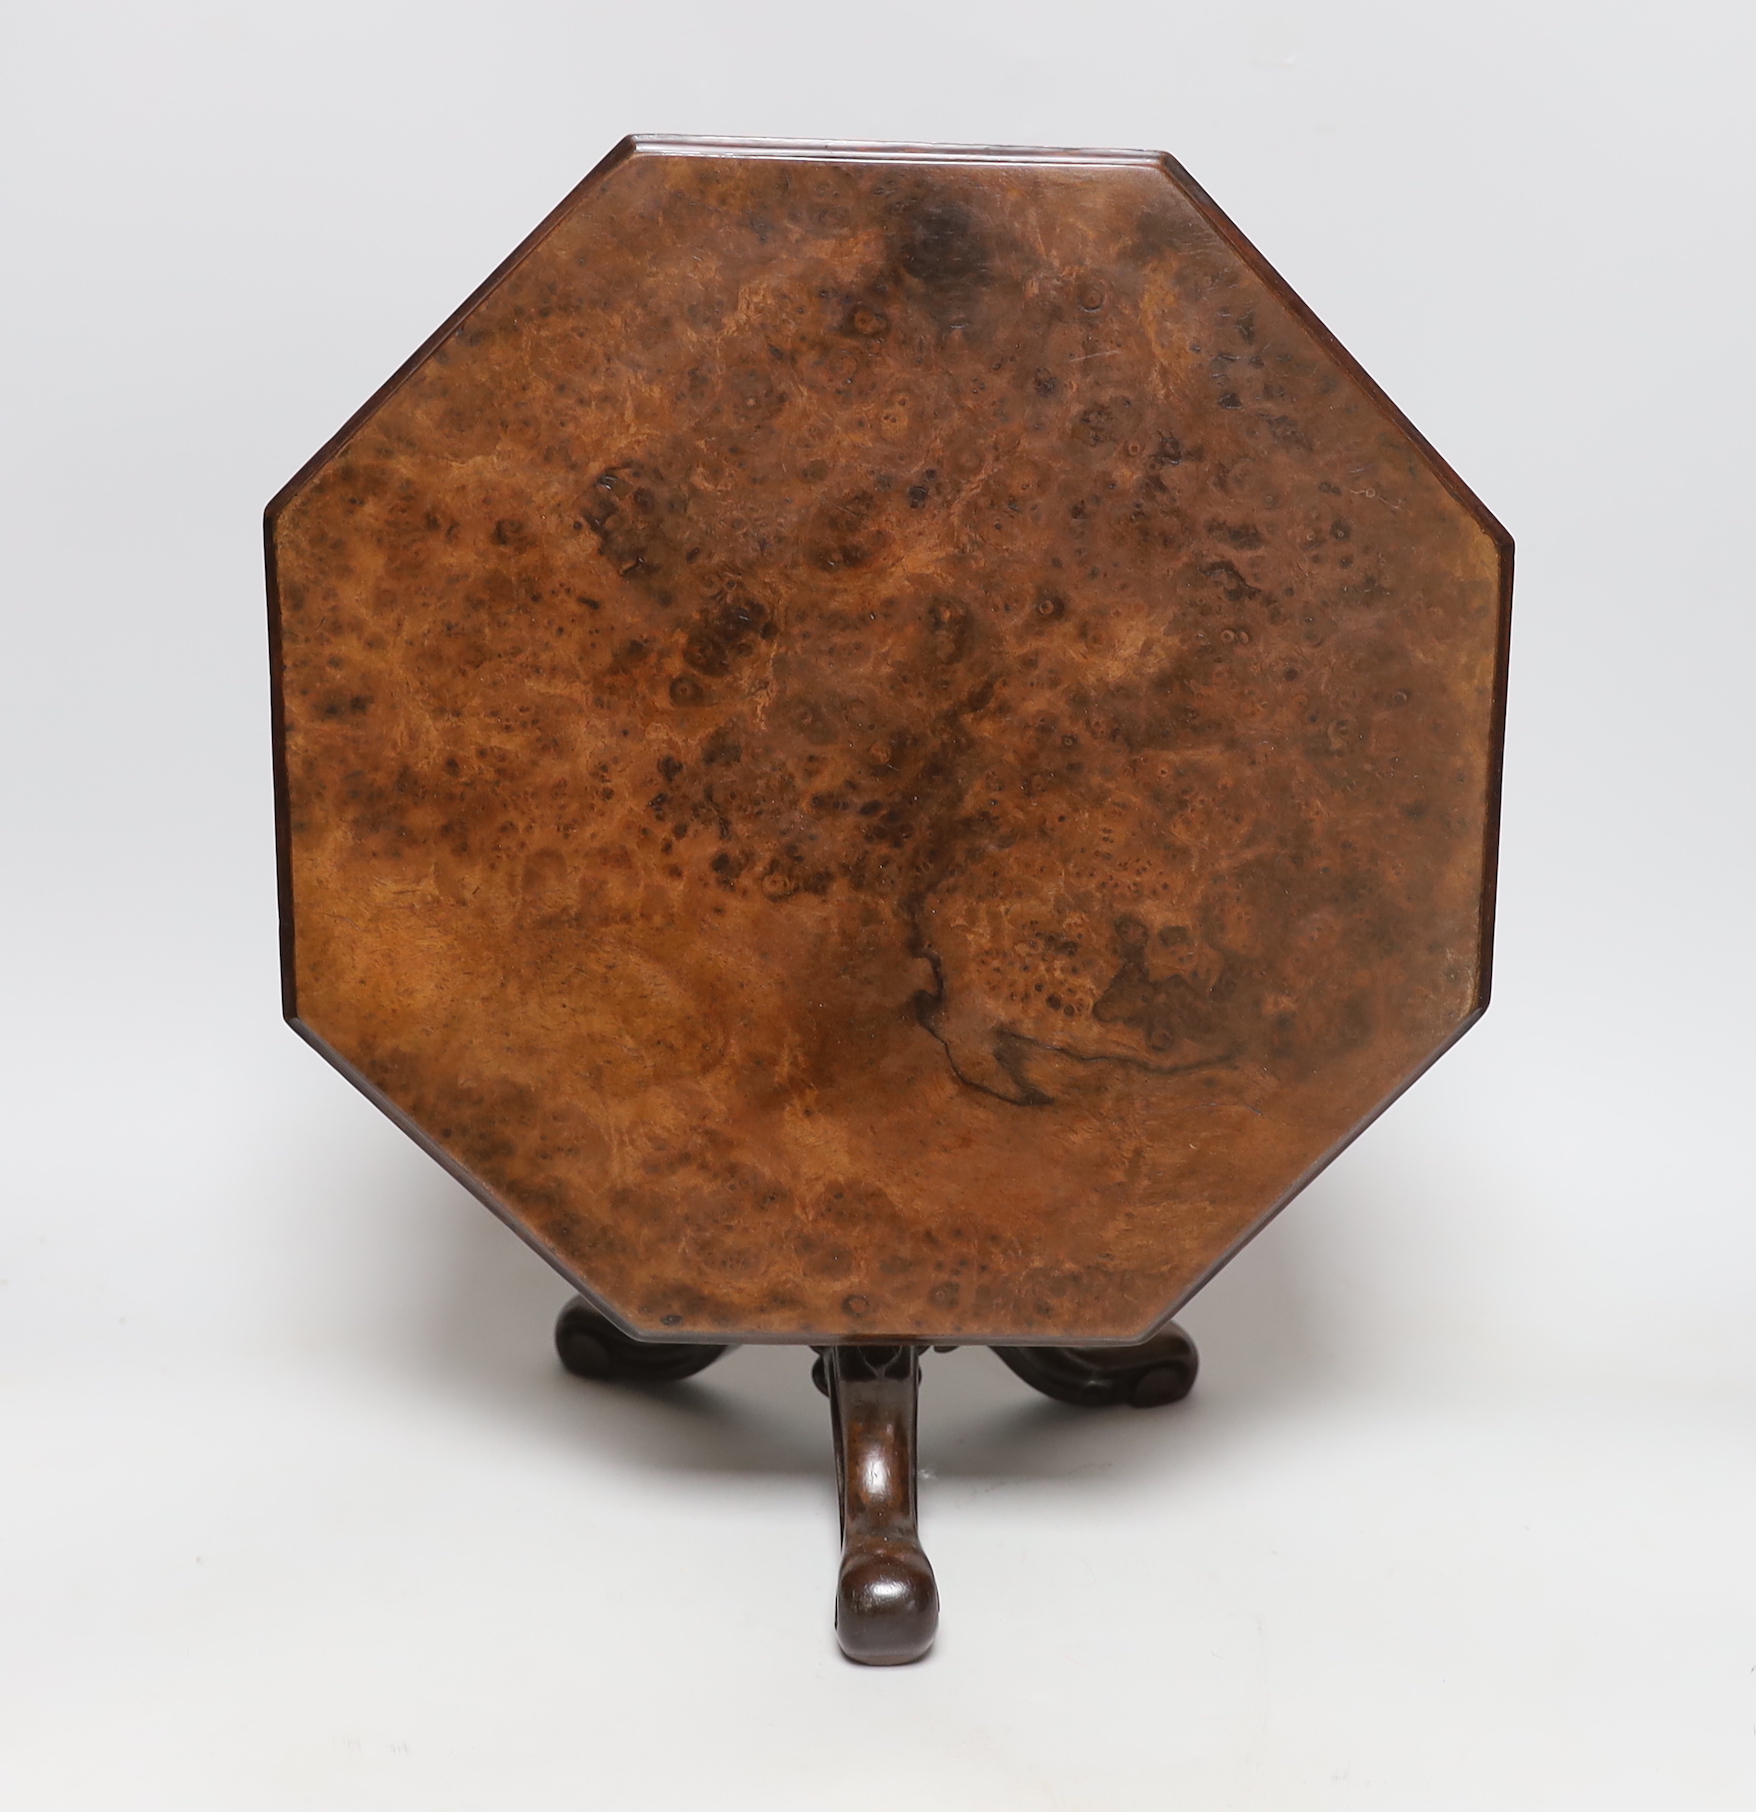 An octagonal topped burr walnut miniature tripod table, 32cm across